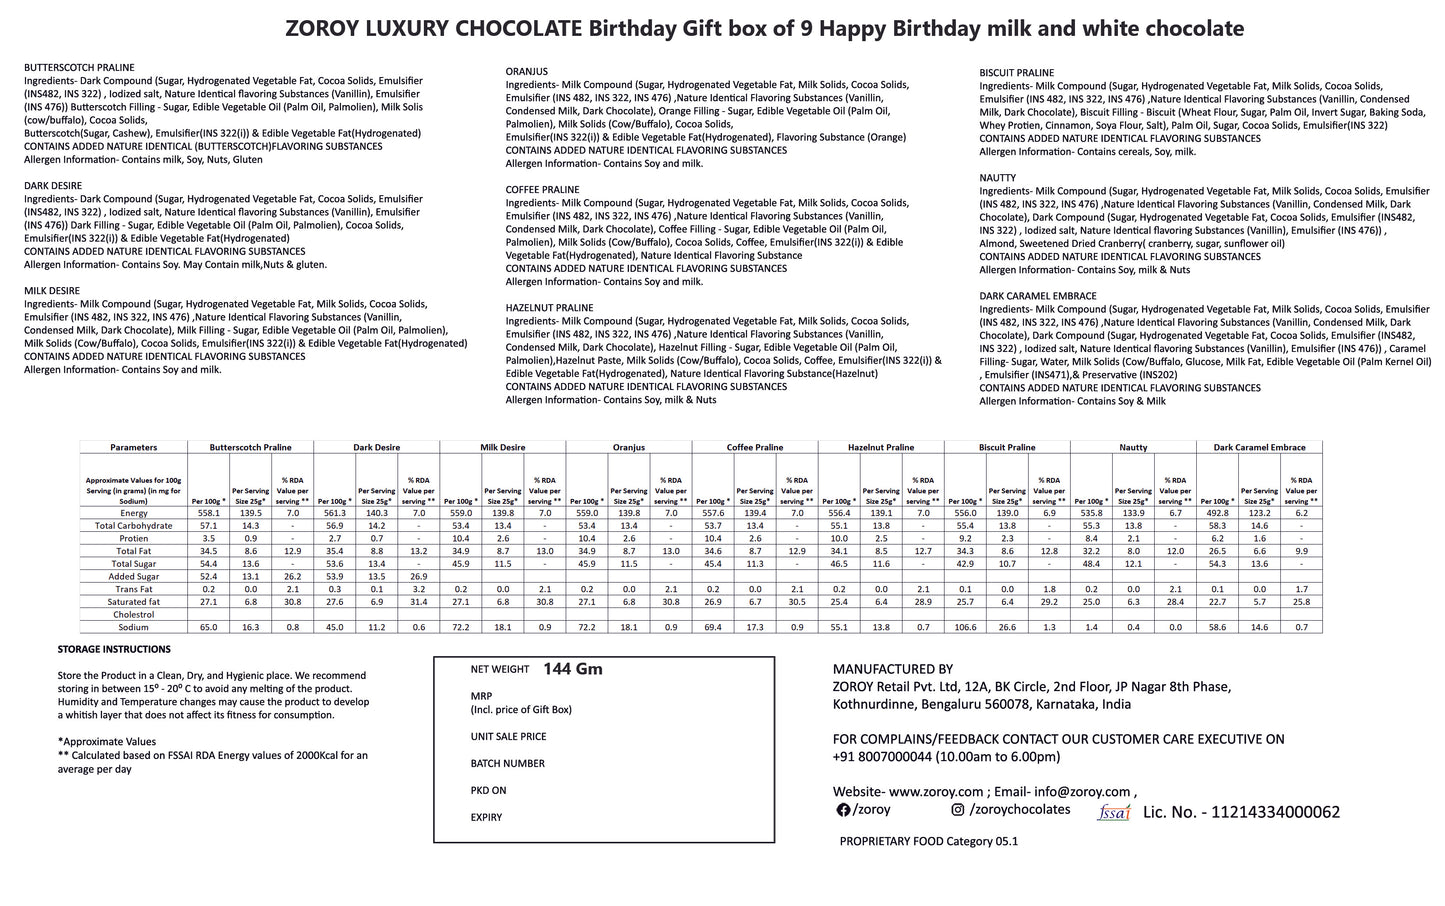 ZOROY Birthday Gift box of 9 Happy Birthday milk and white chocolate